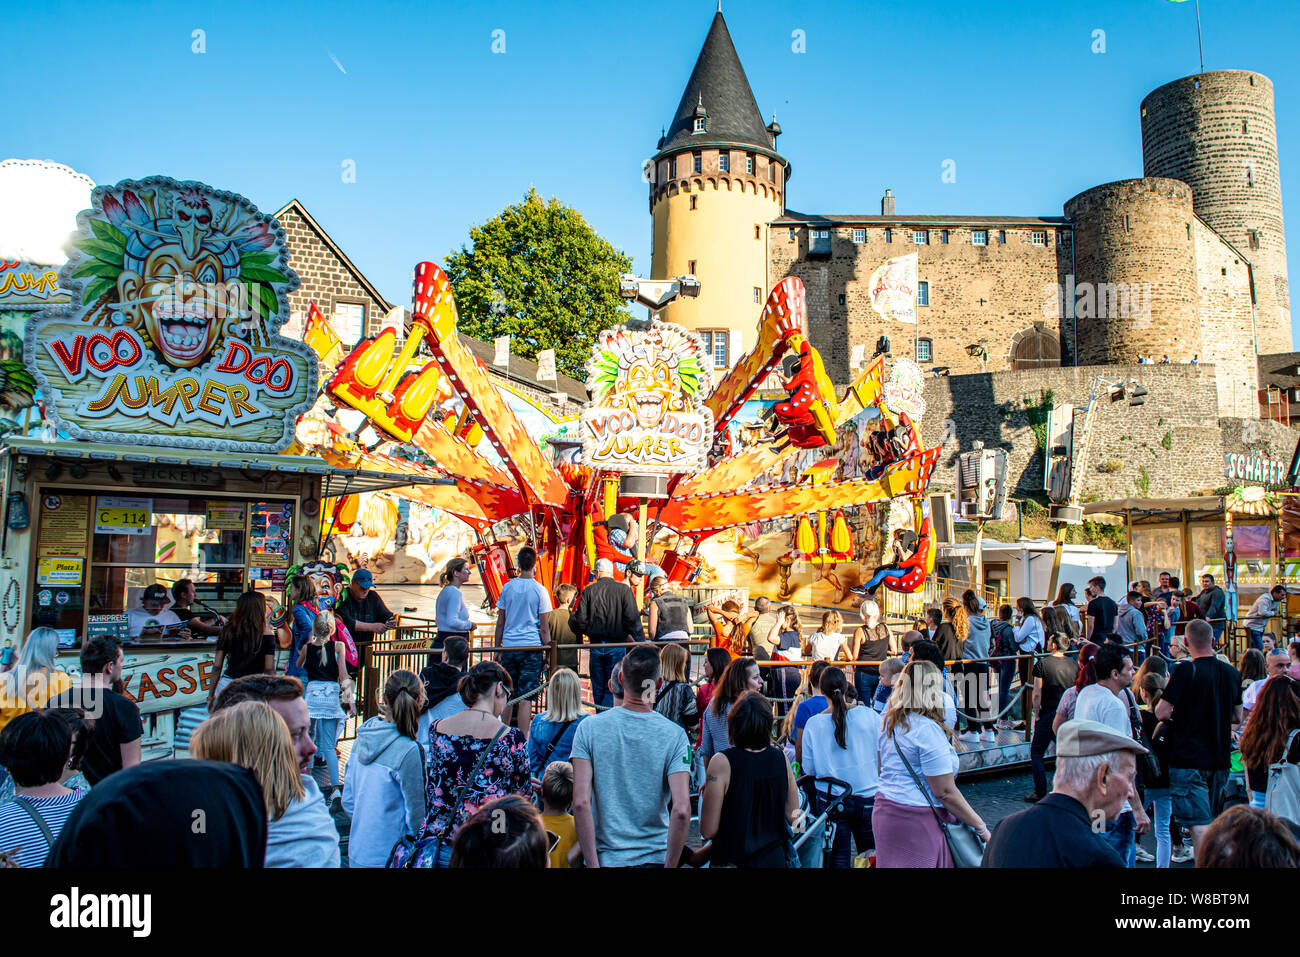 Mayen Germany 14.10.2018 people fairground huge carousel swing ride at biggest folk festival in Rhineland Palantino the lukasmarkt in Mayen. Stock Photo